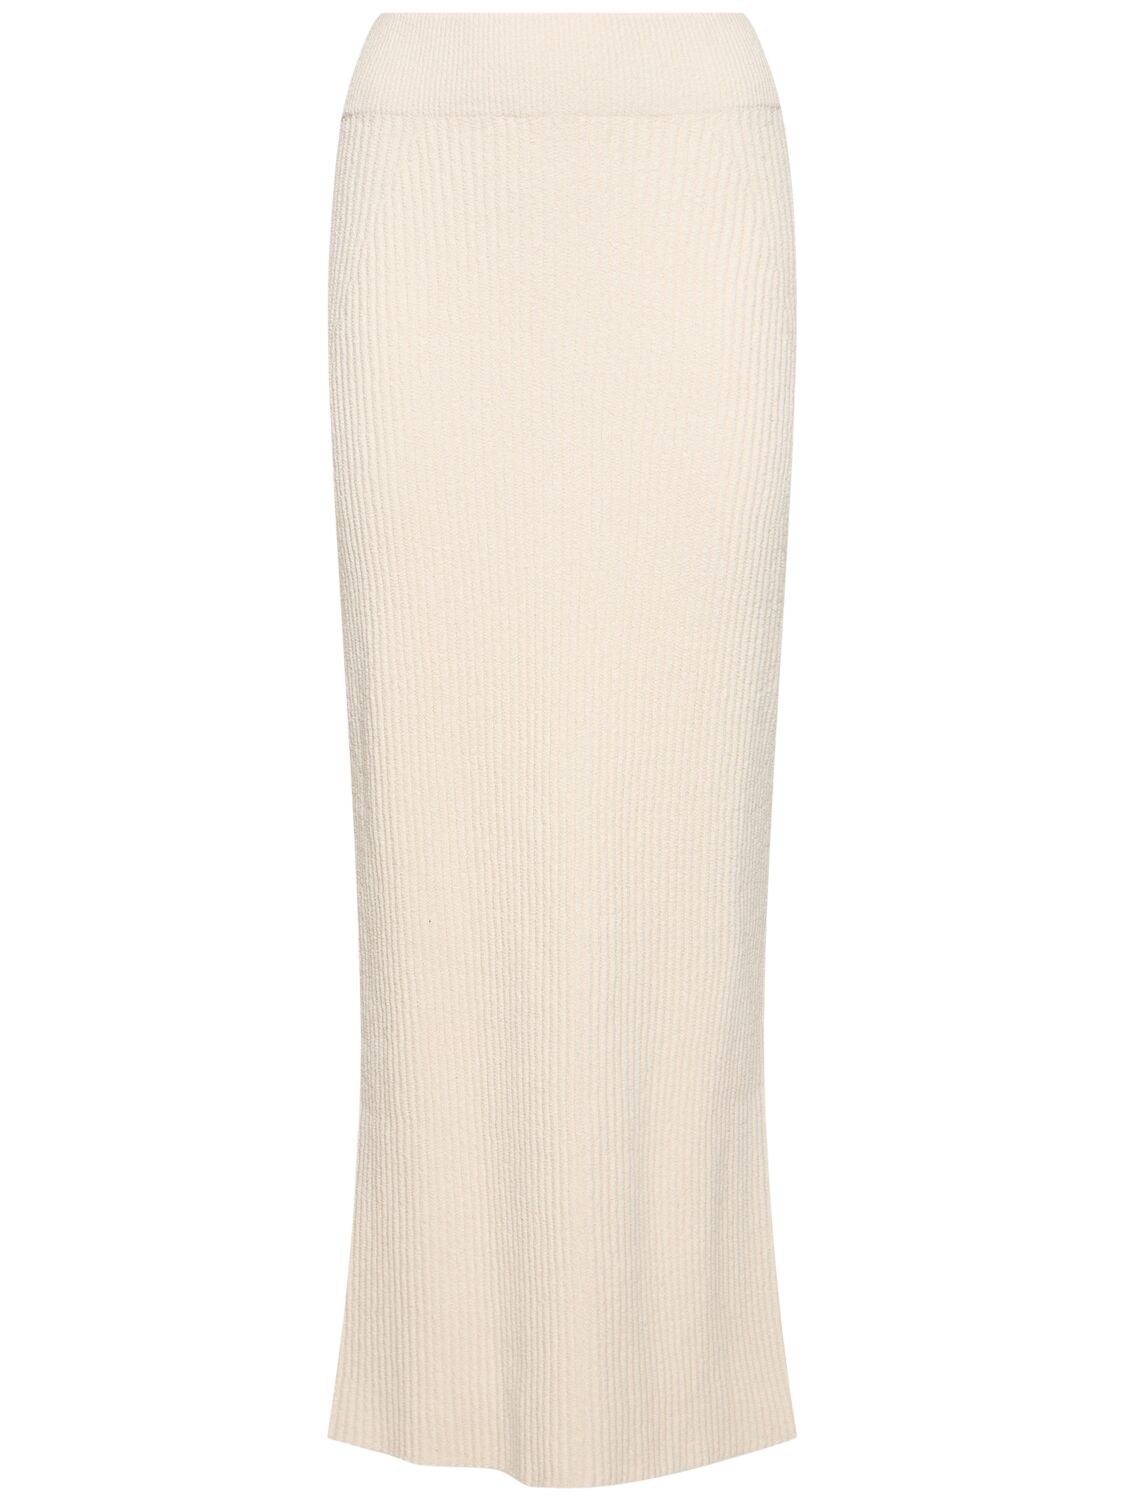 Bouclé Knit Cotton Blend Long Skirt